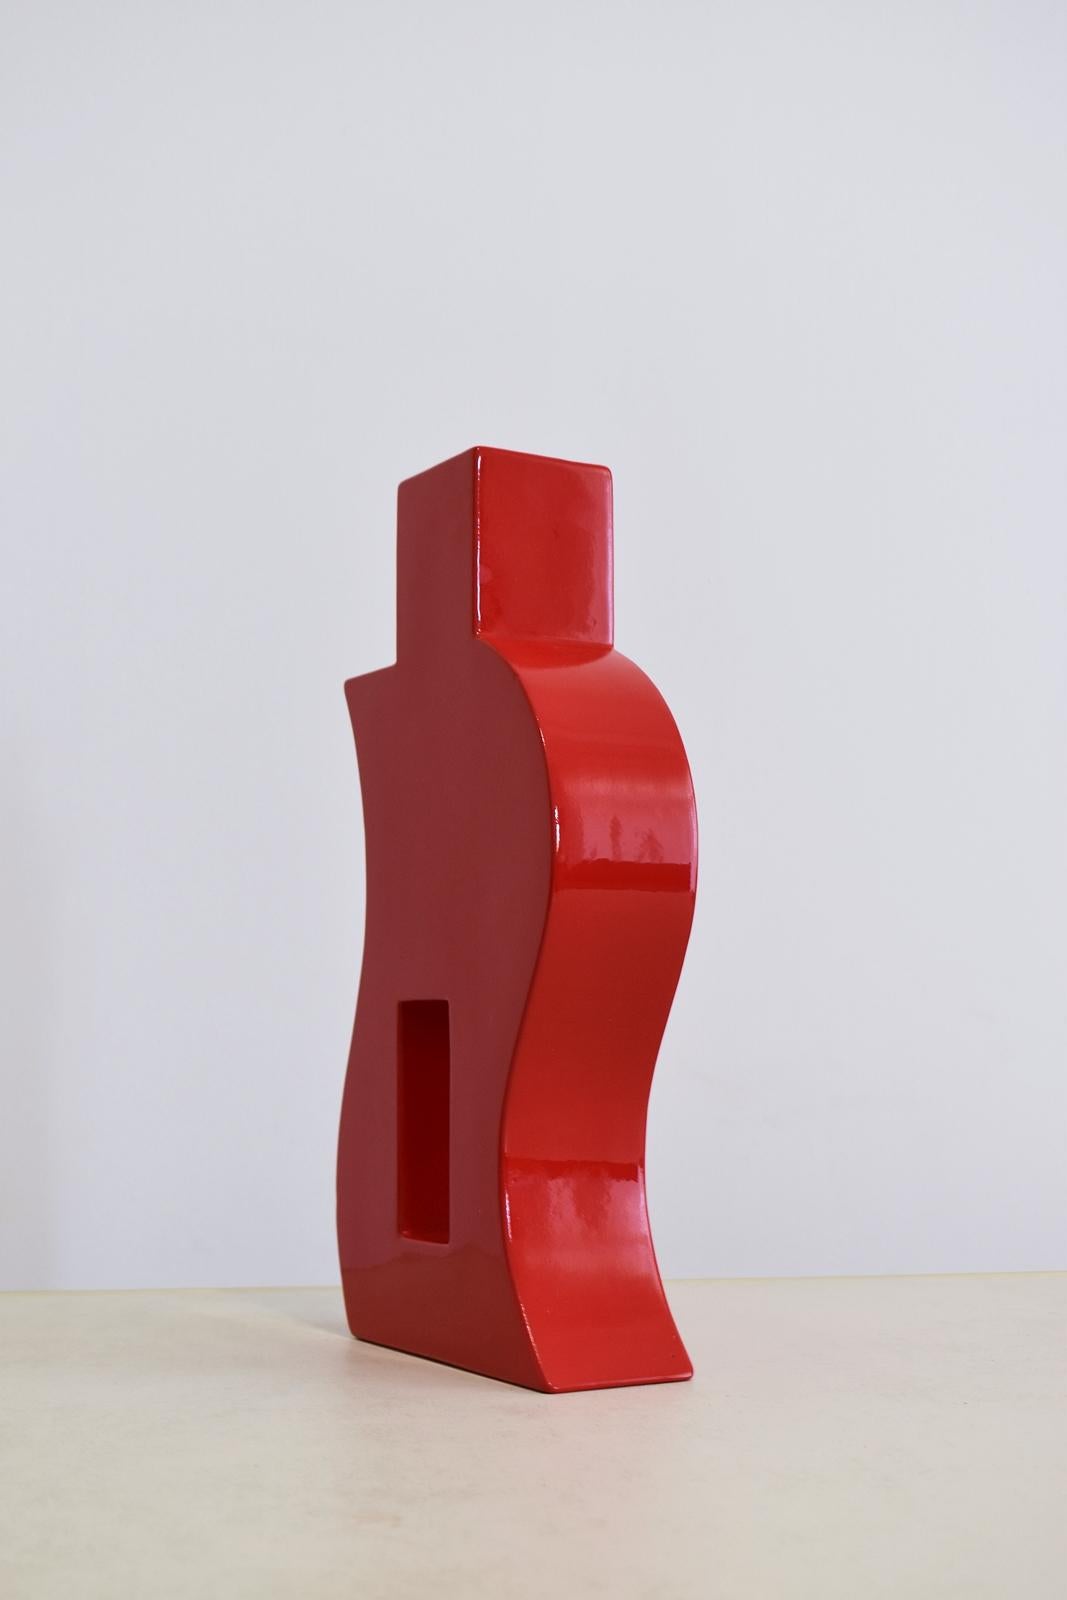 Hungarian Memphis Milano Ceramic Vase Syntónia by Luciano Florio Paccagnella, 1990s